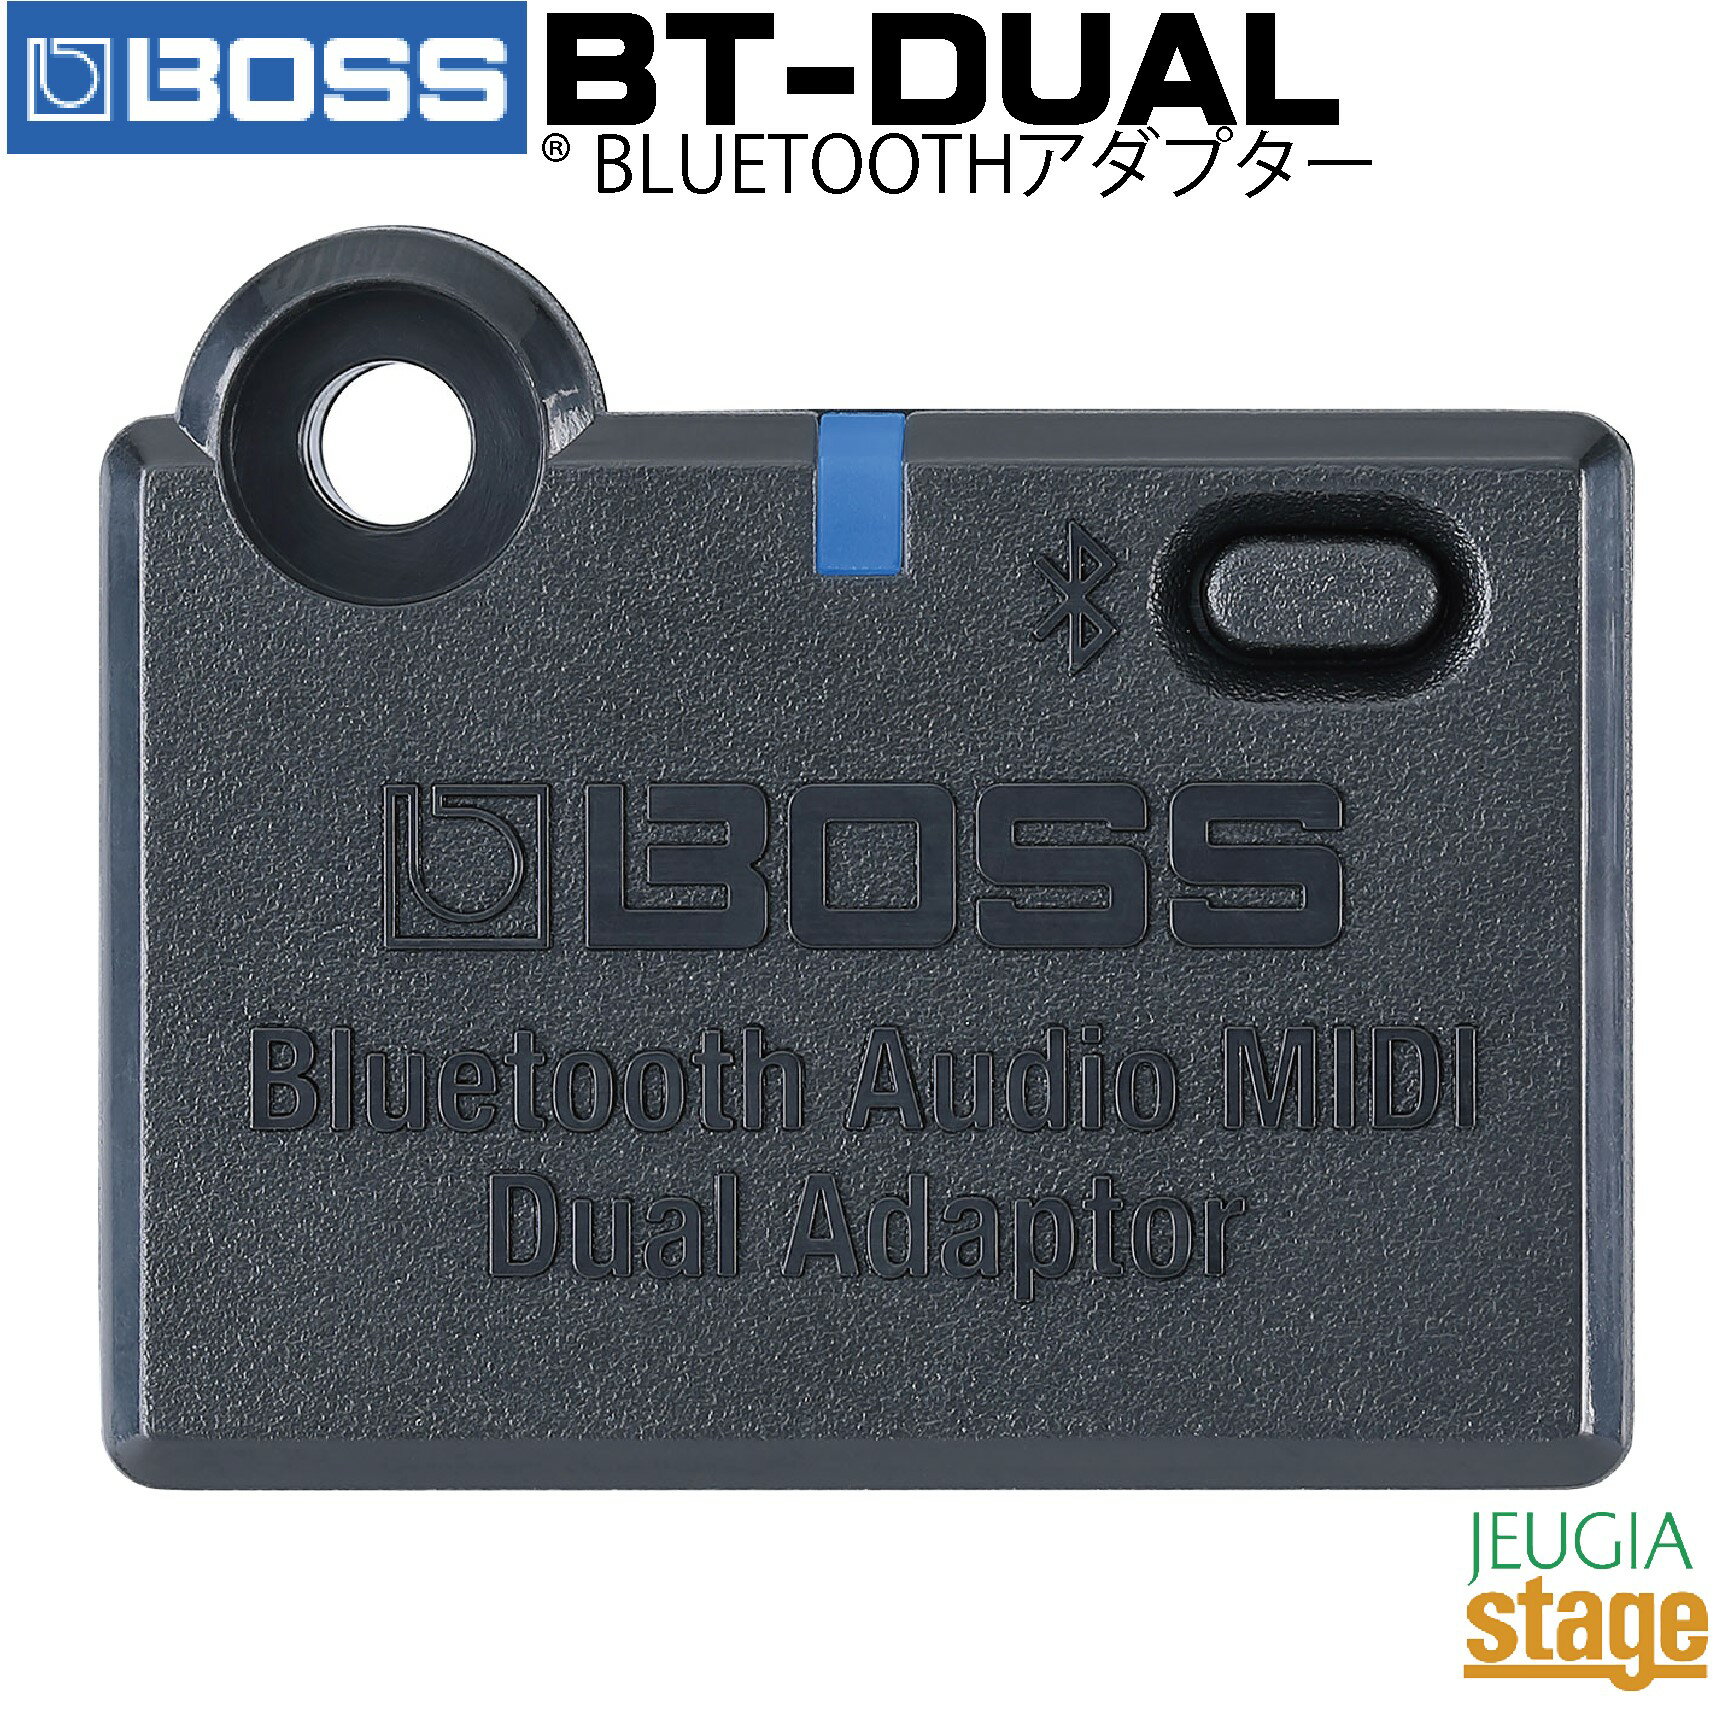 BOSS BT-DUAL Bluetooth® Audio 